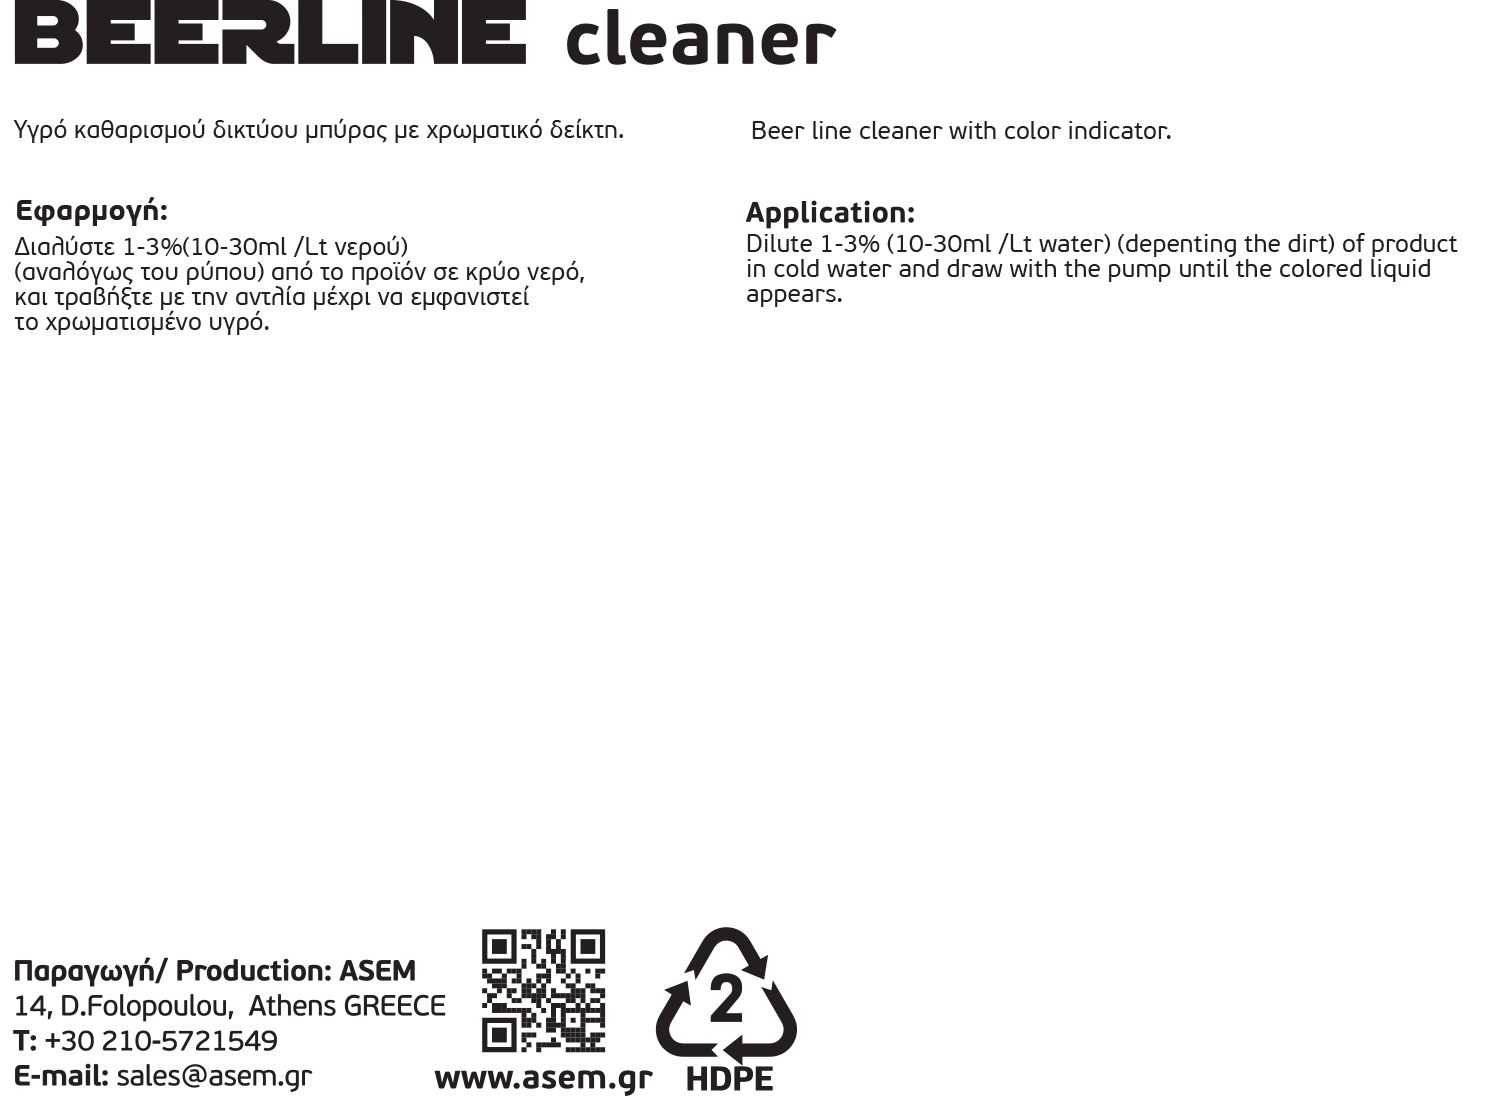 BEER LINE Cleaner Οπίσθια (134 X 100)